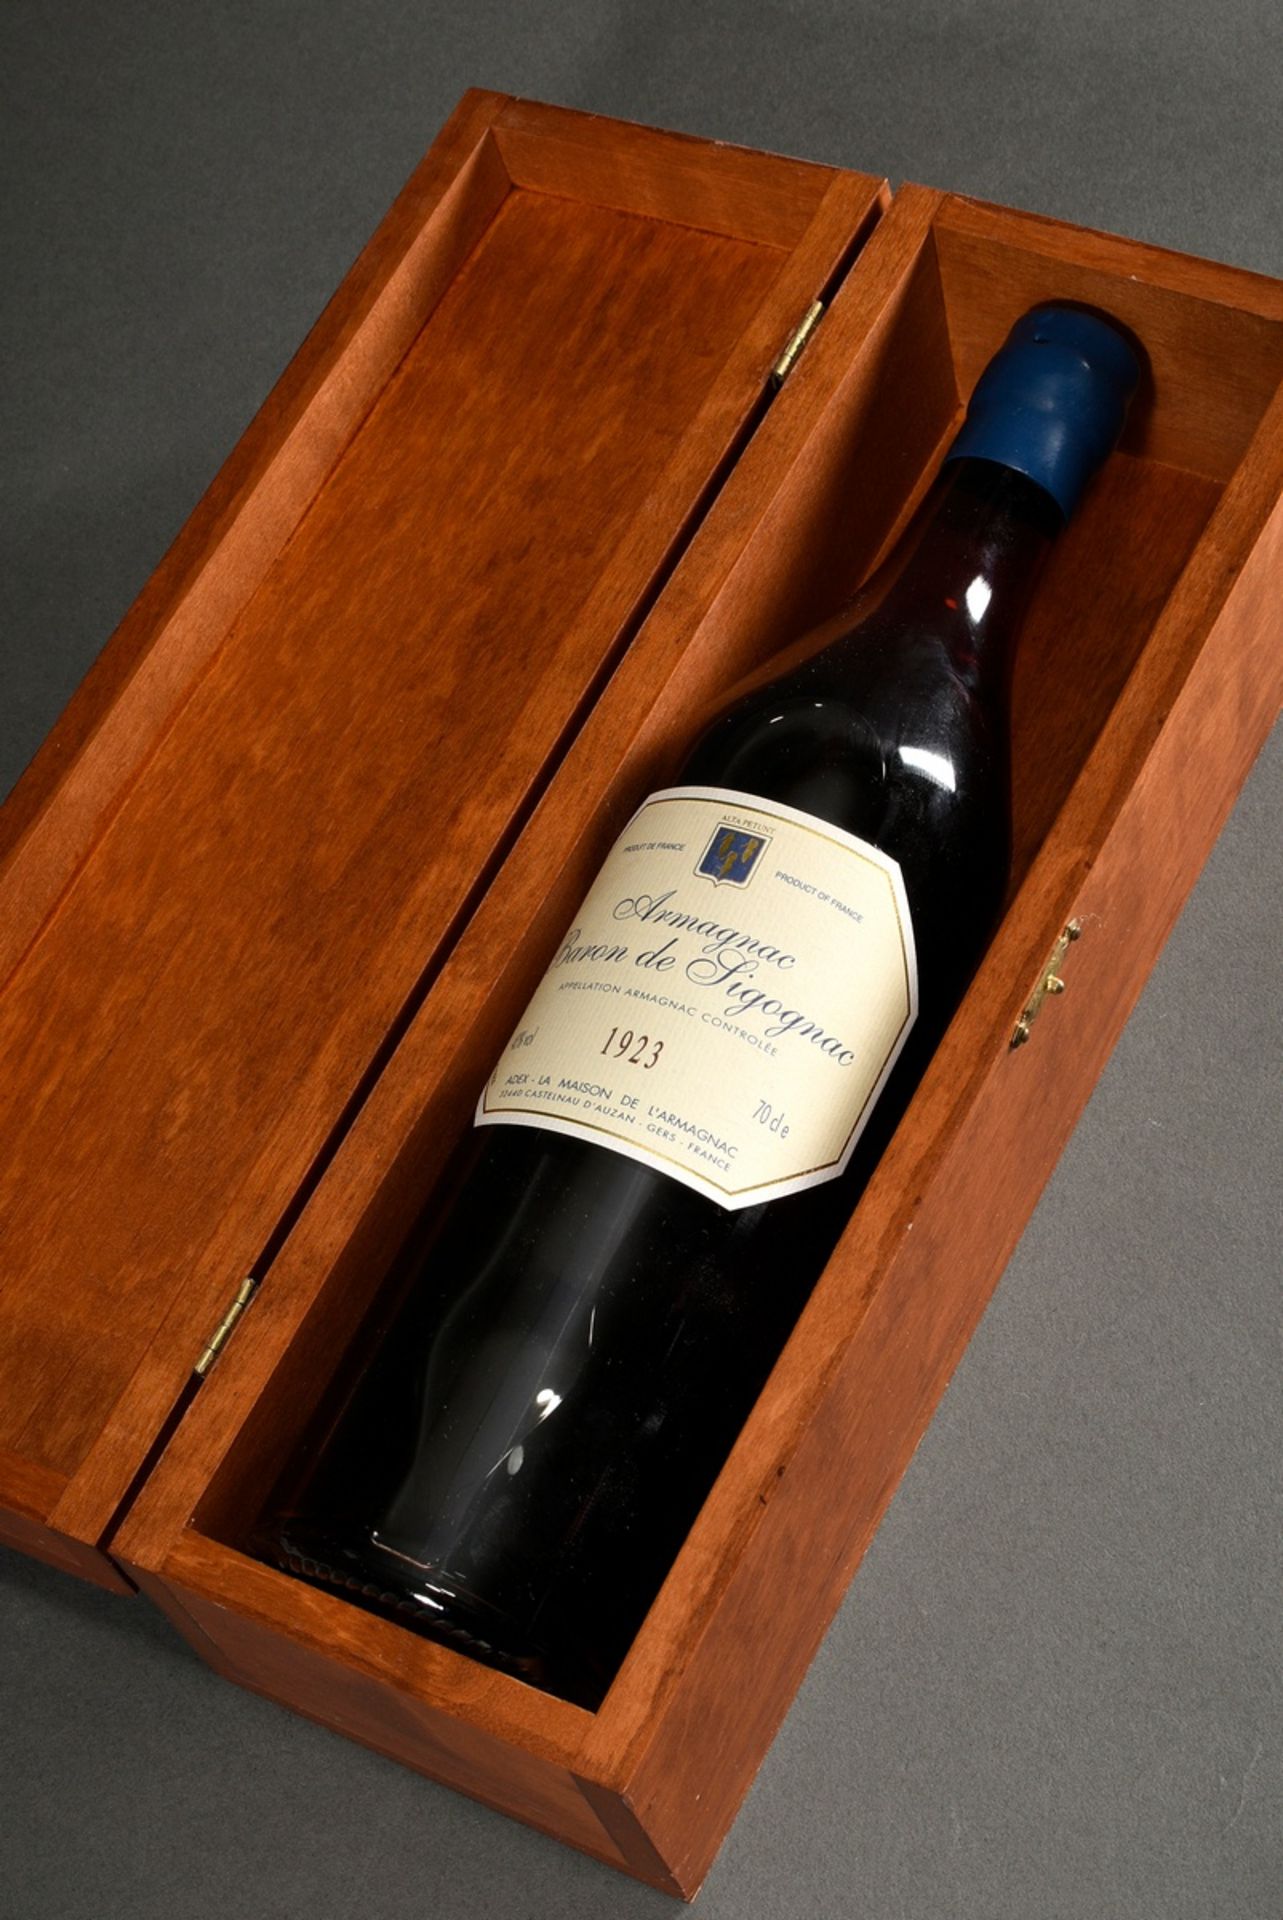 Bottle of Armagnac "Baron de Sigognac" 1923, in original wooden box with brass label, Gers, France, - Image 5 of 7